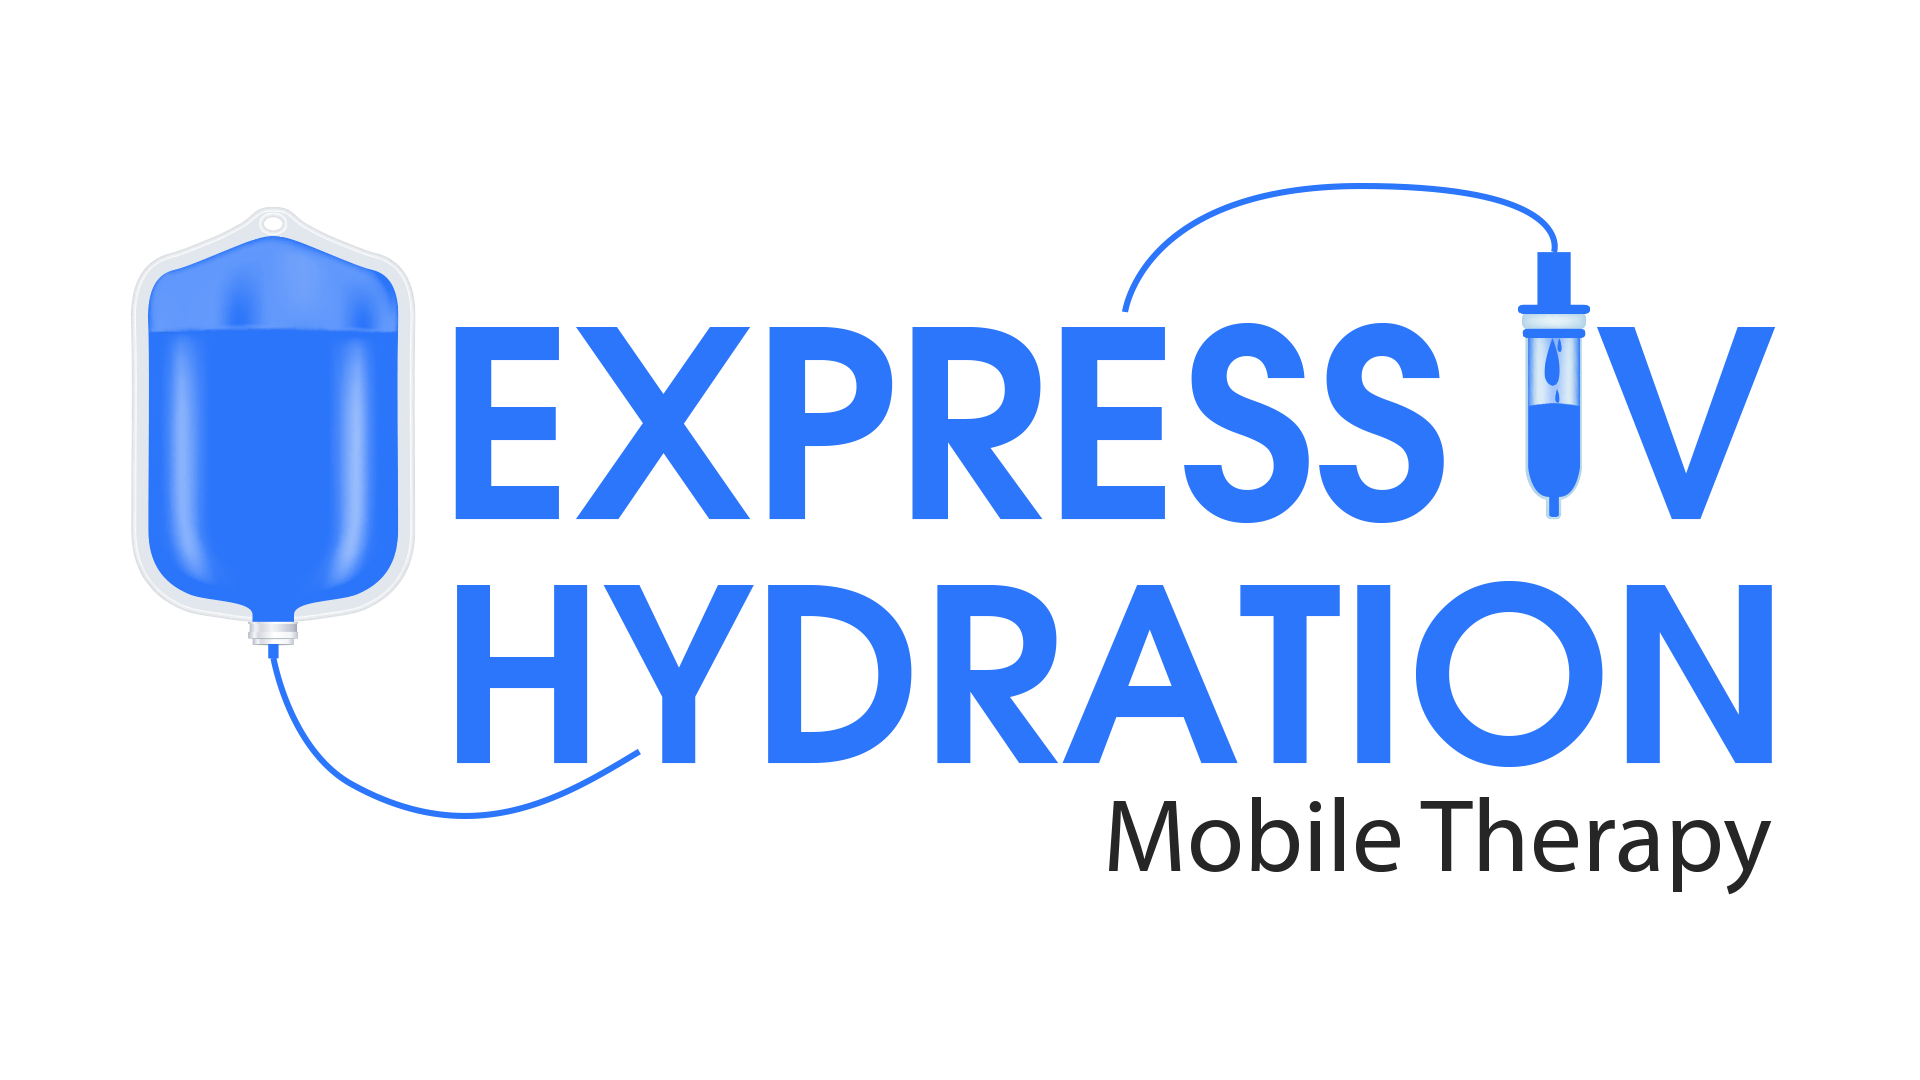 Express IV Hydration